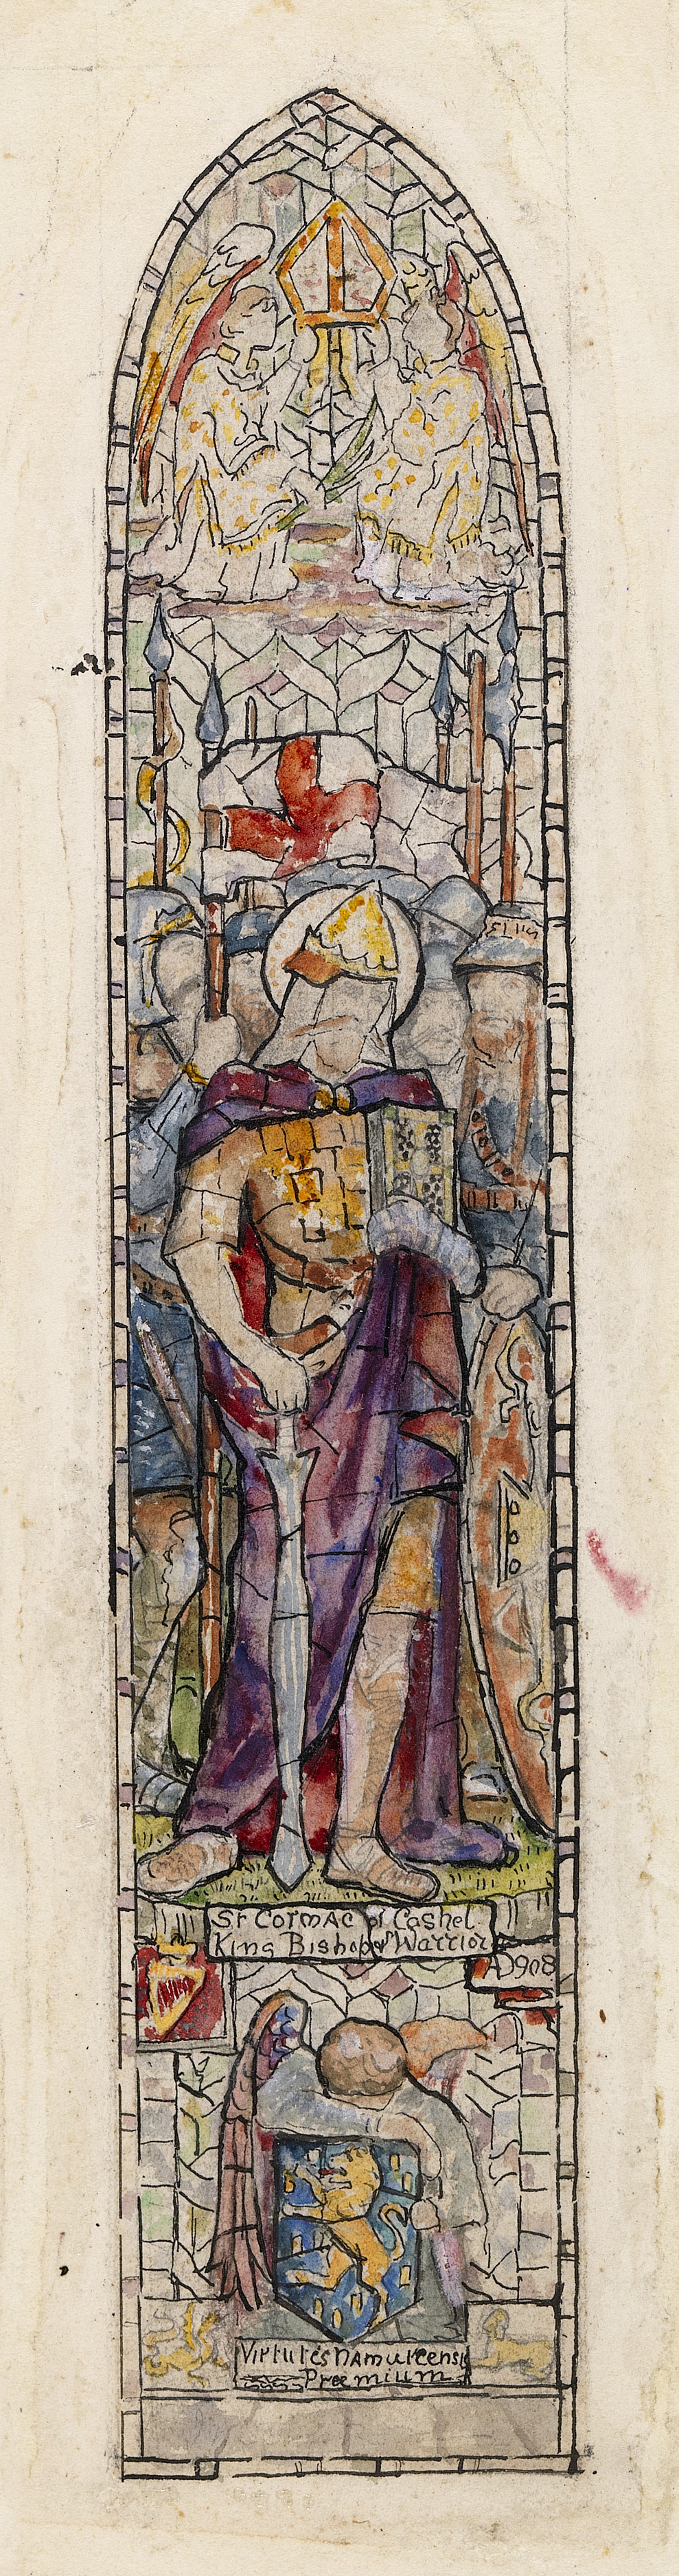 Watercolour sketch design depicting Saint Cormac of Cashel, by Sarah Purser